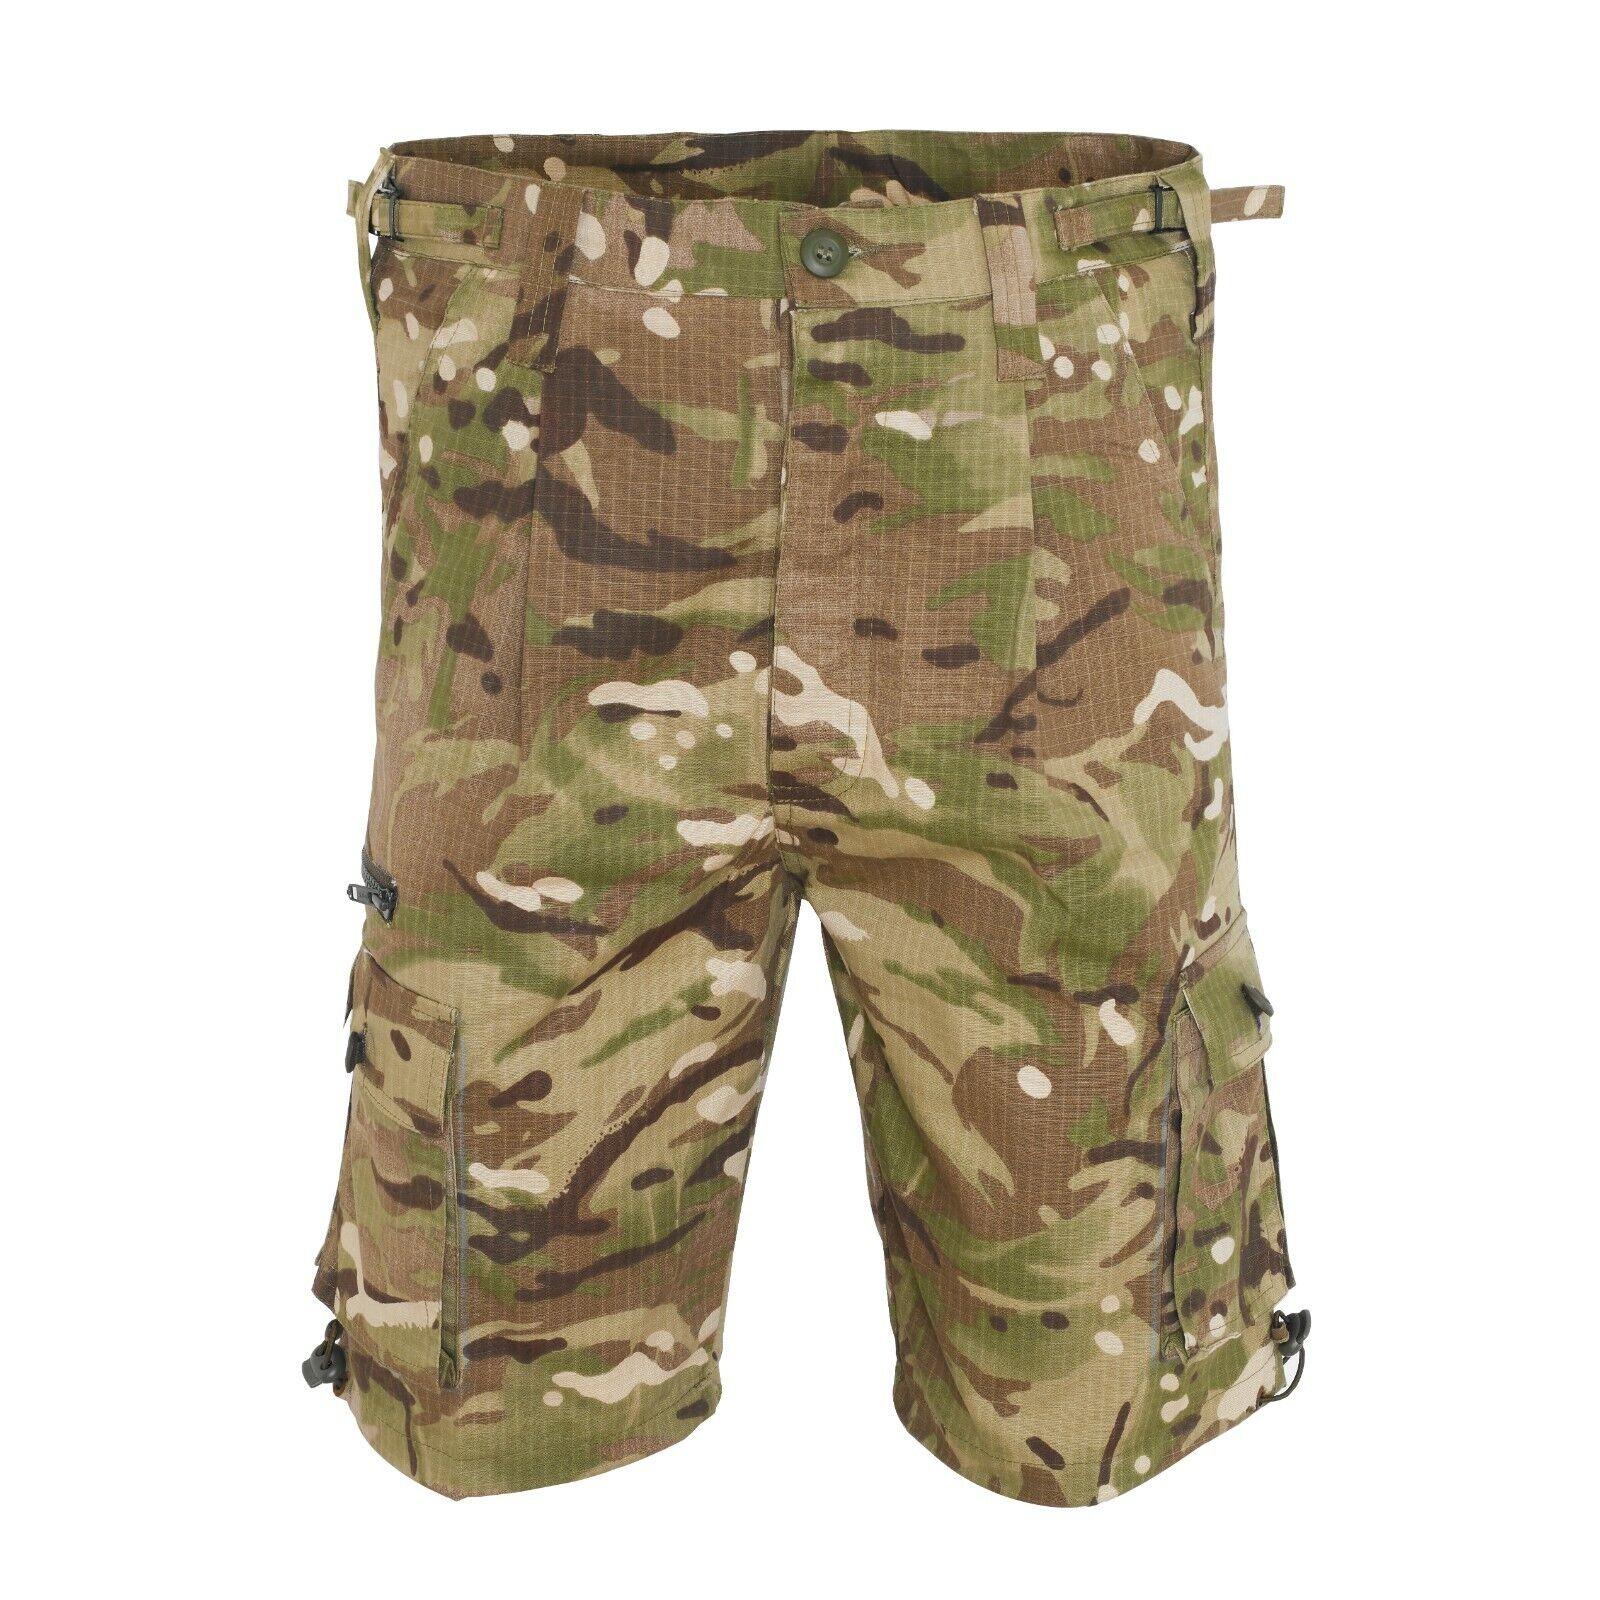 British army style mtp shorts PCS 3/4 Multi Camo Combat Warm Weather